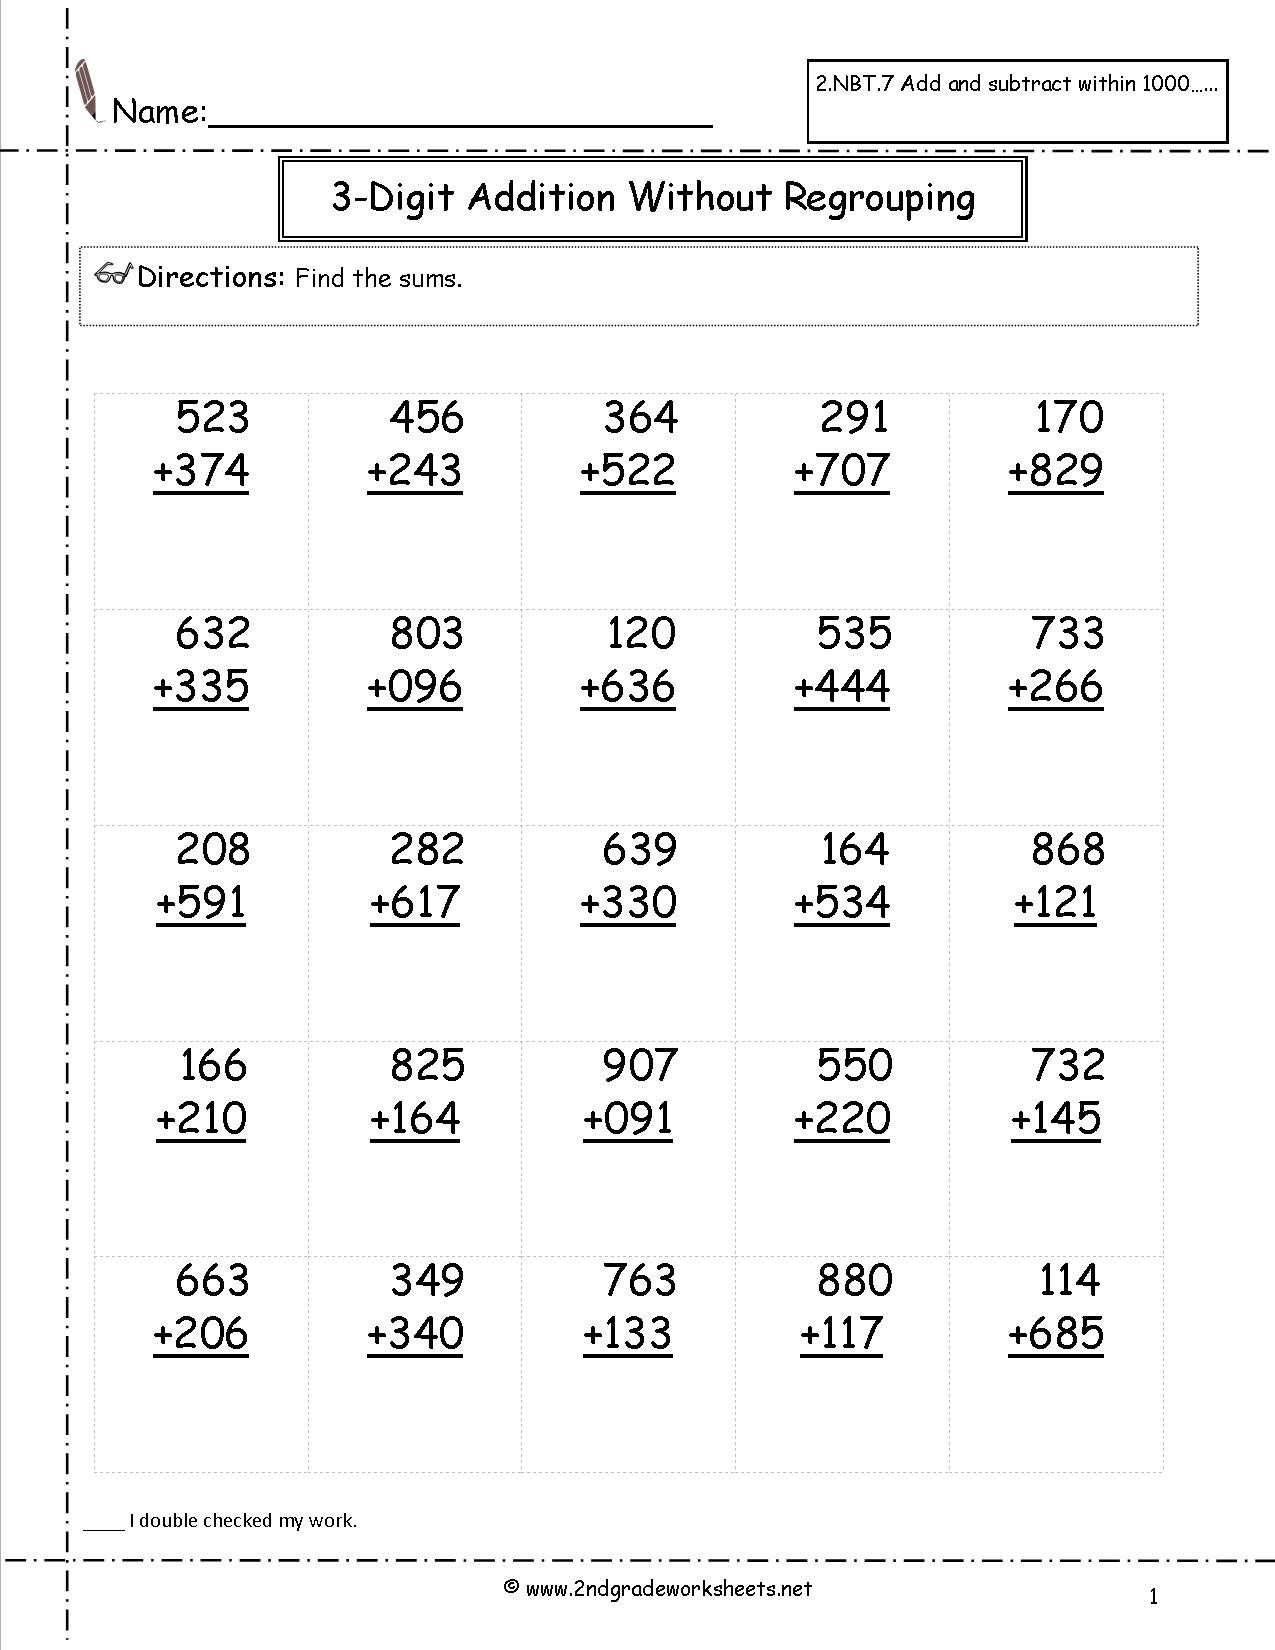 Free Math Worksheets Fourth Grade 4 Addition Addition Missing Number Sum Under 100